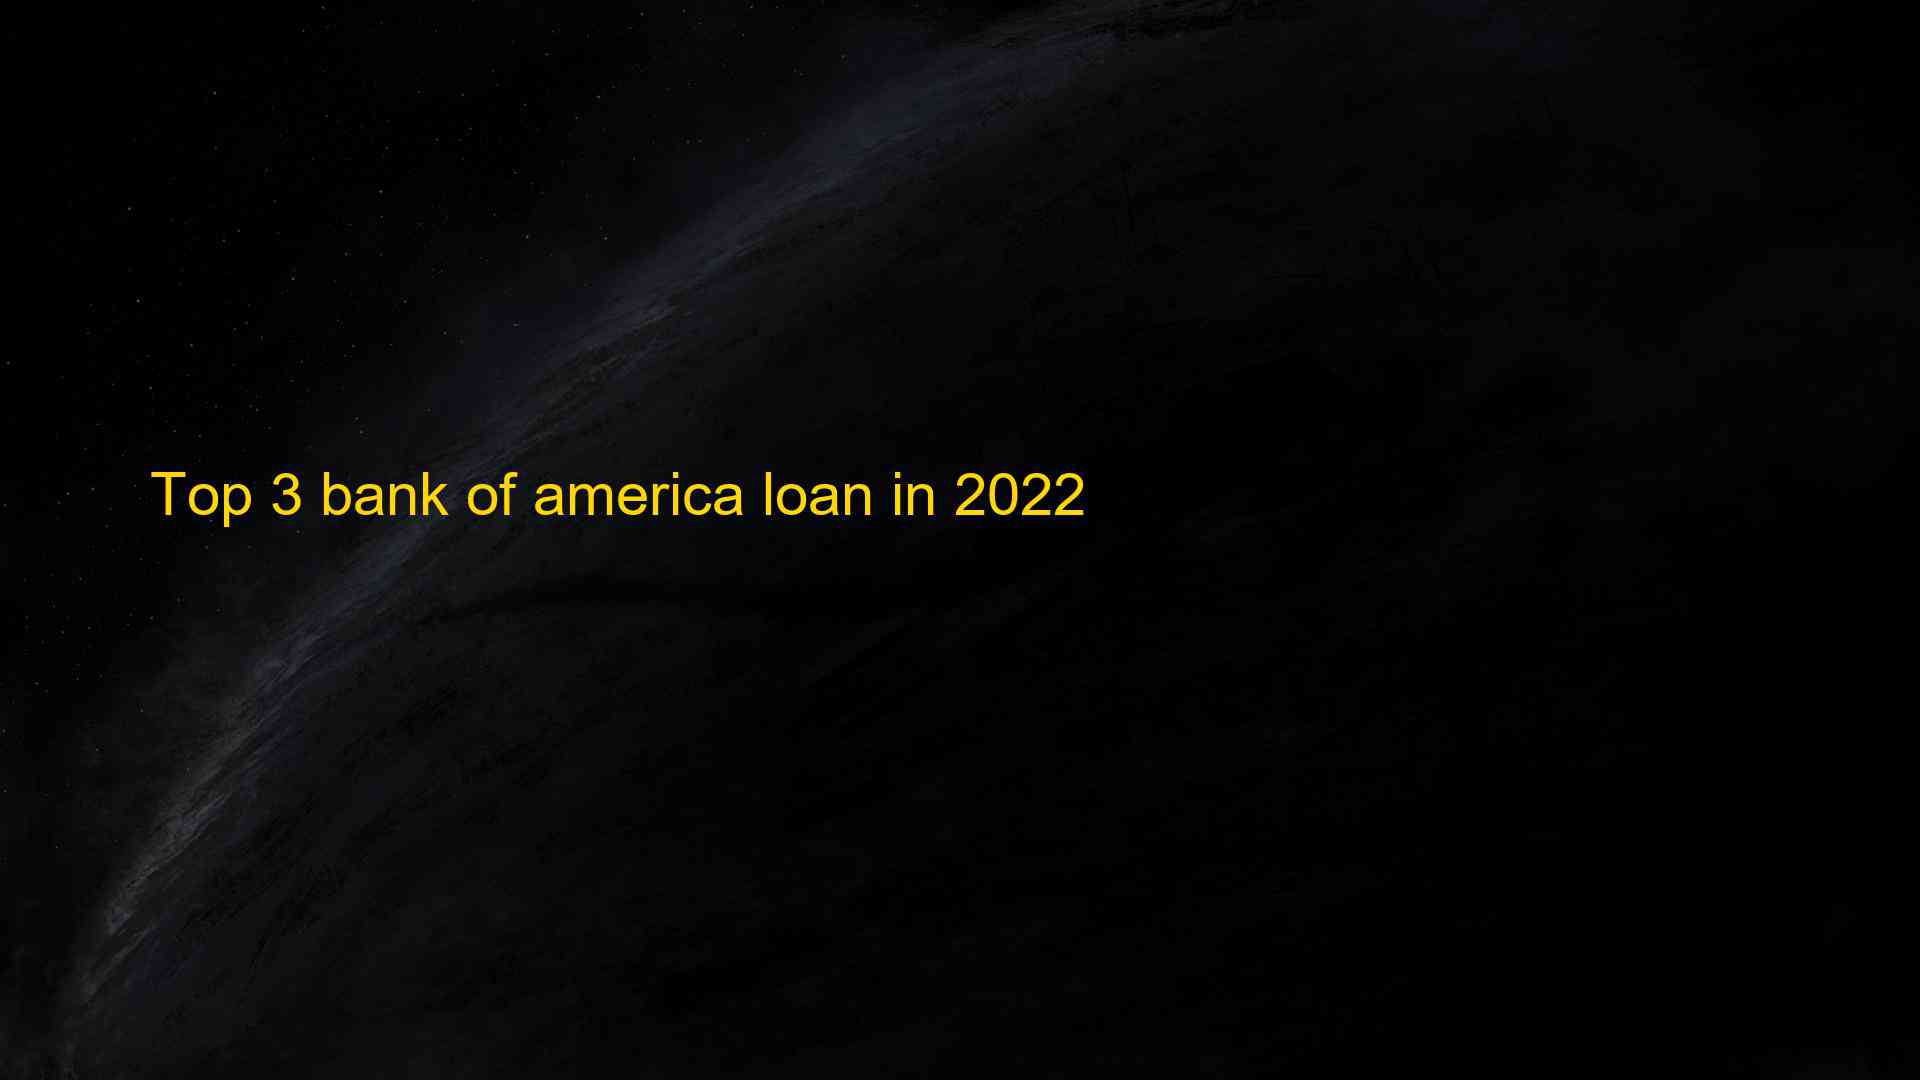 Top 3 bank of america loan in 2022 1659575930